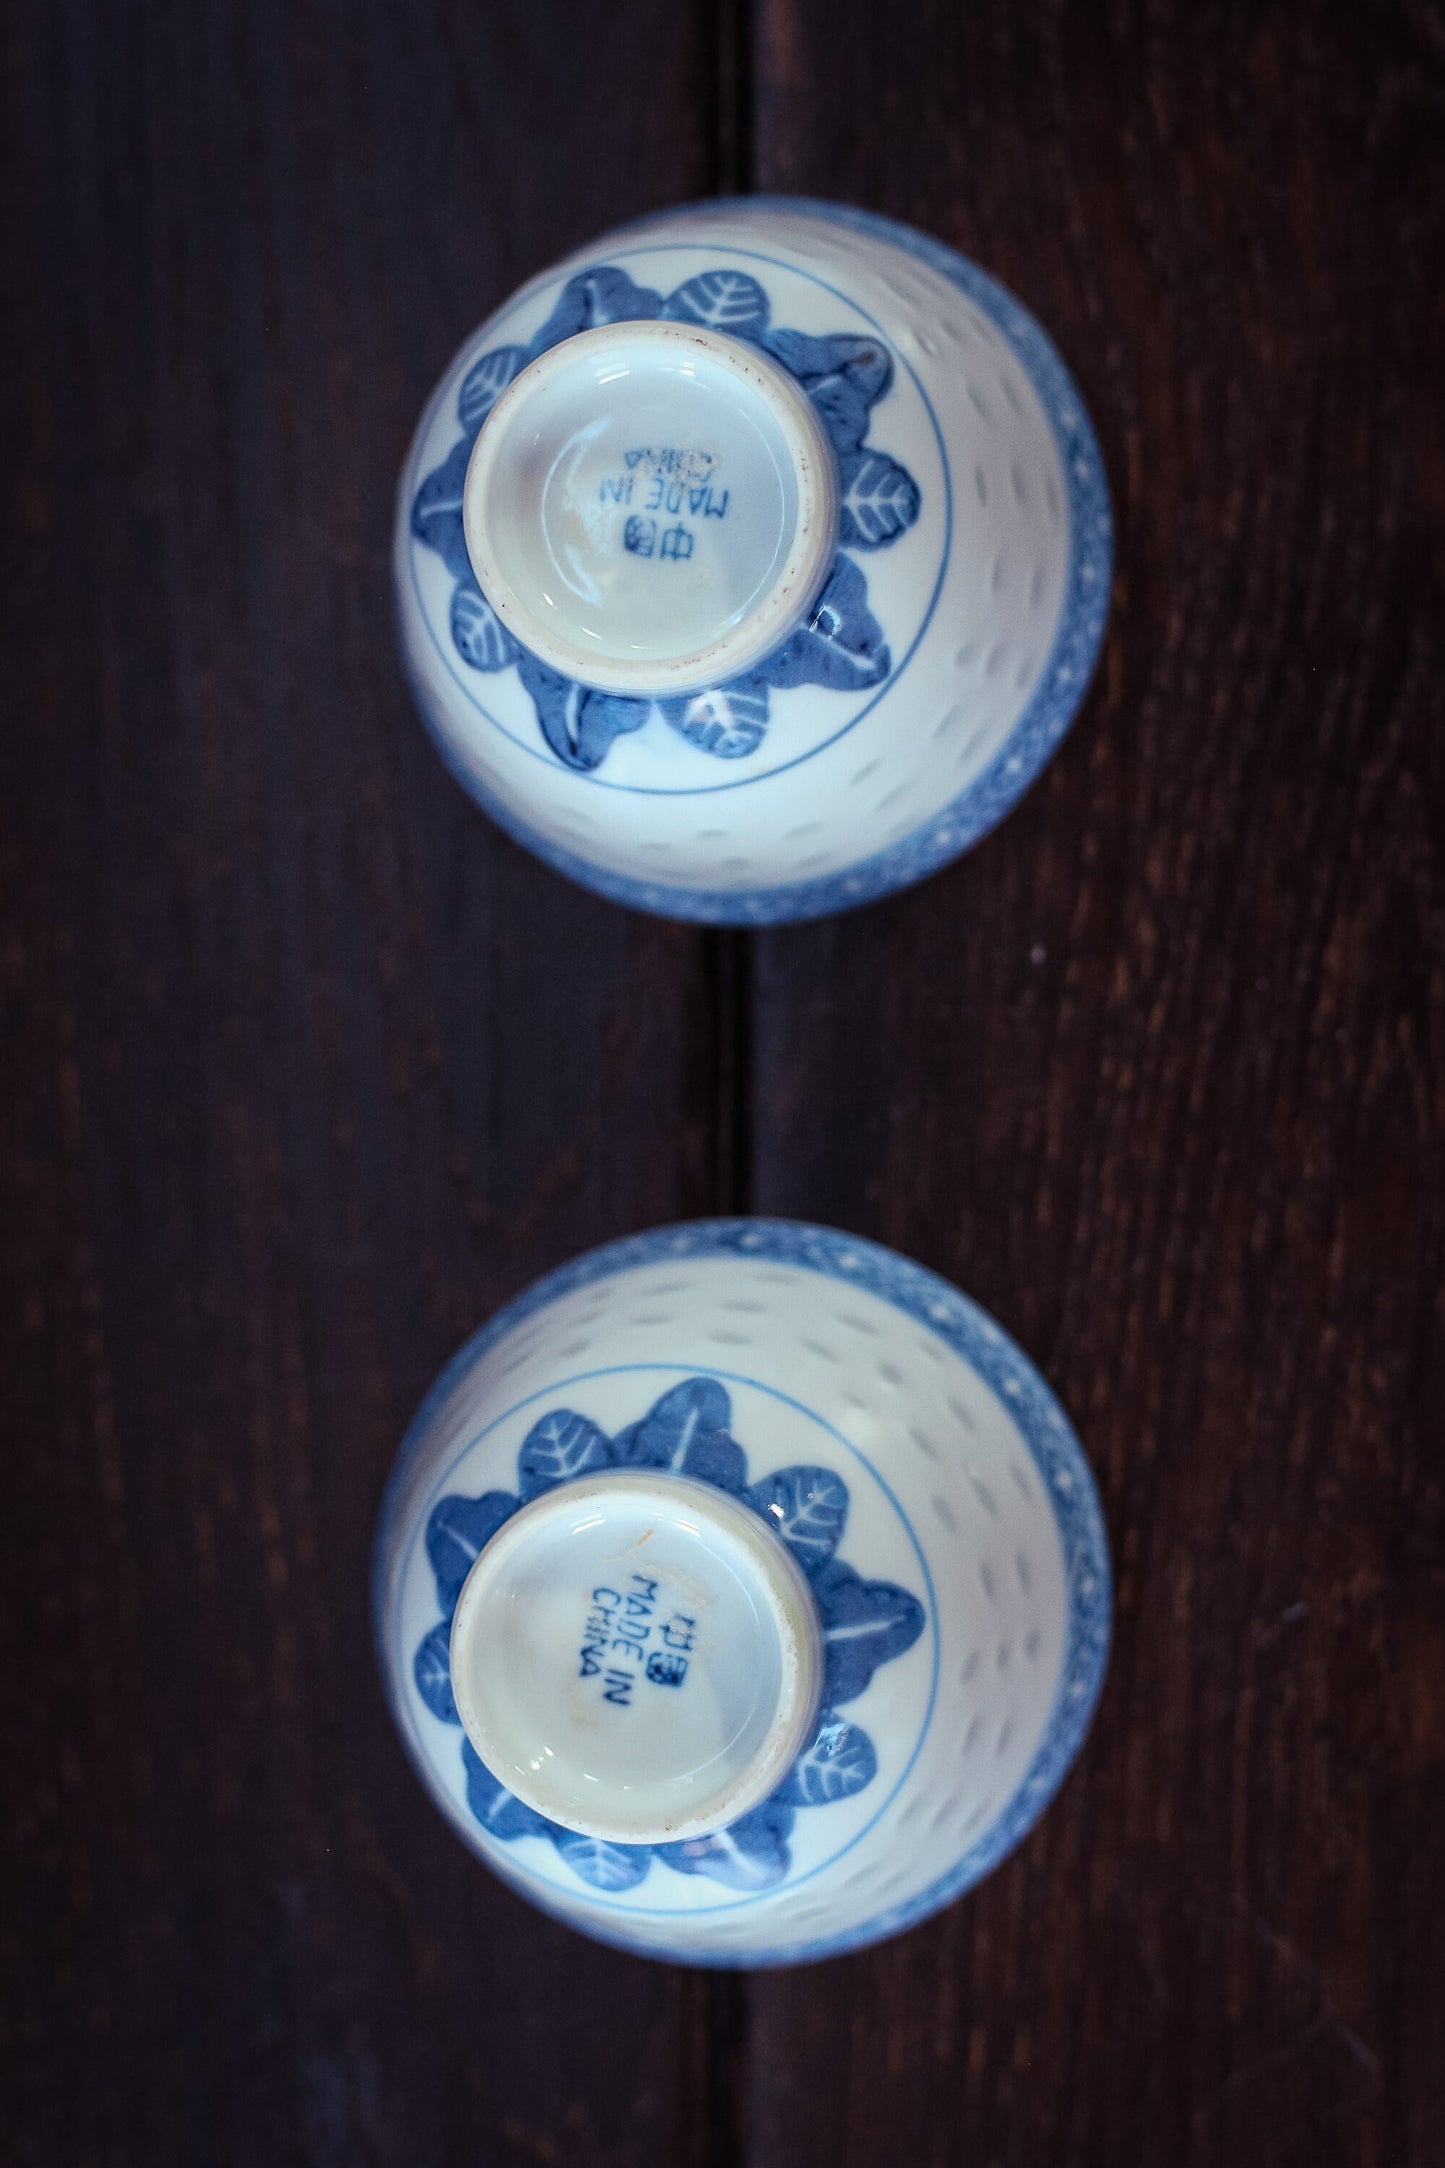 Pair of Porcelain Tea Cups - Vintage Chinese Blue White Tea Set